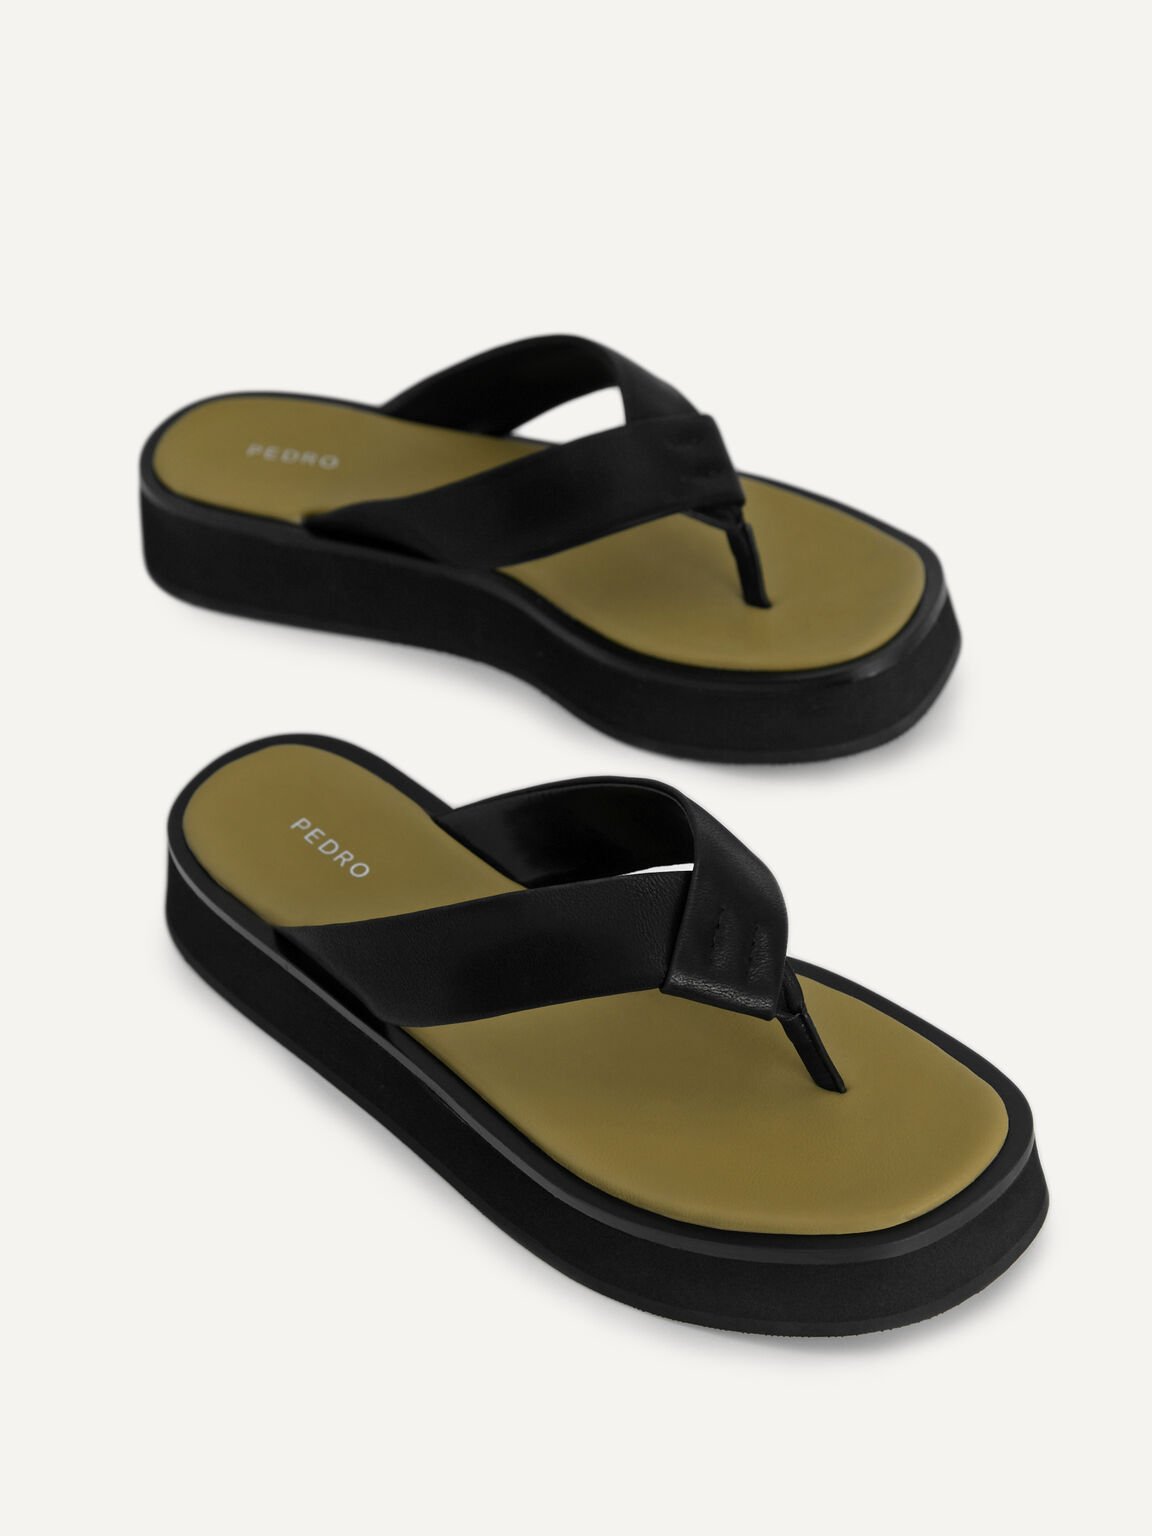 Thong Flatform Sandals, Black